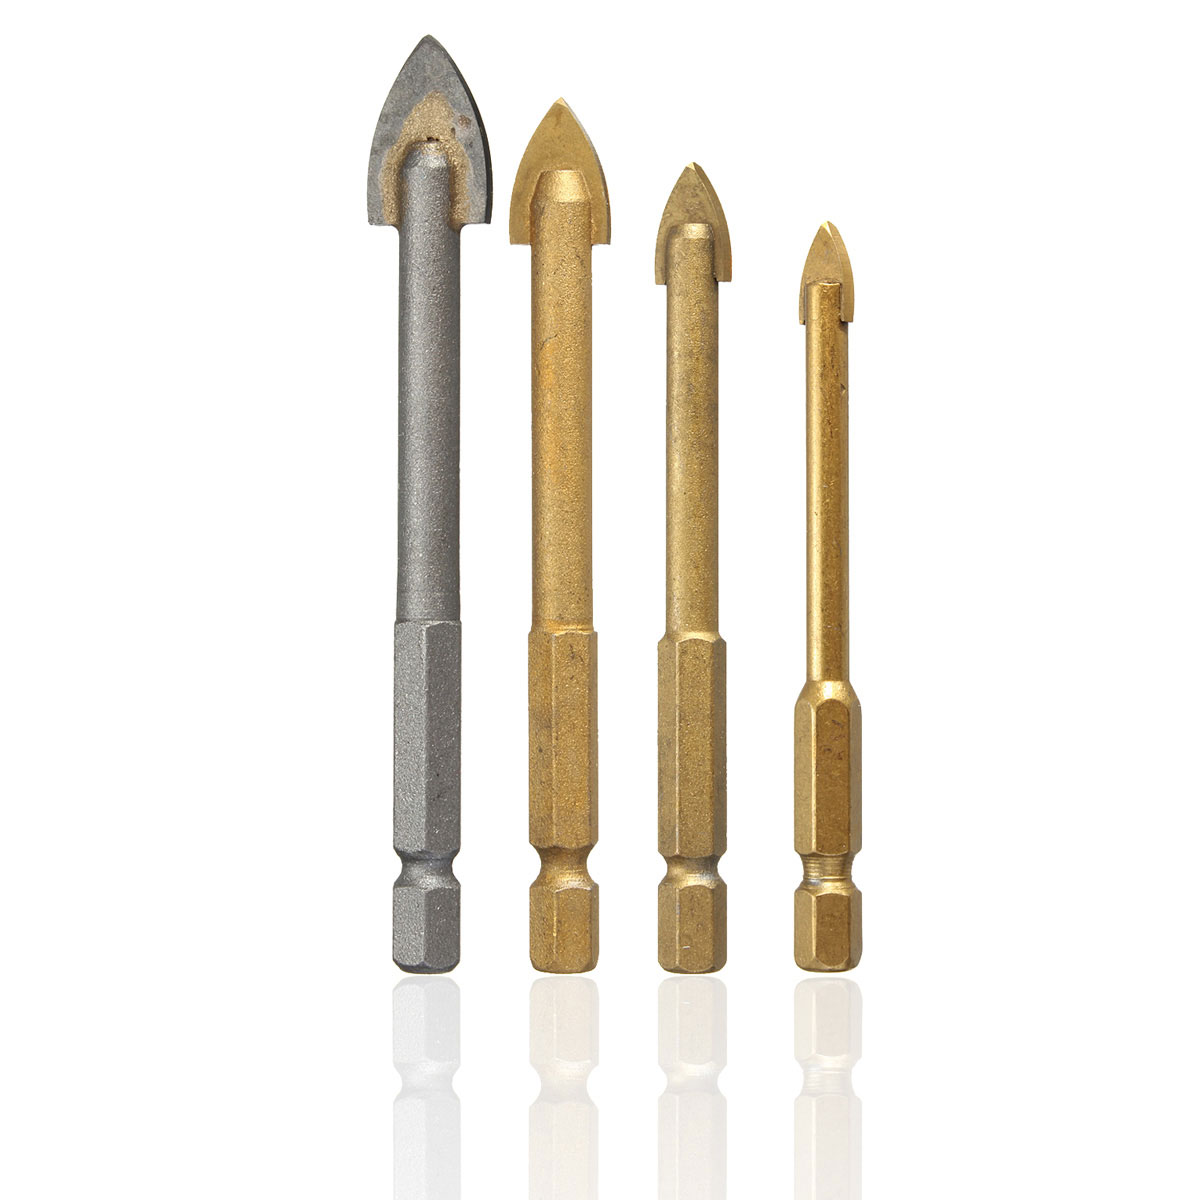 6-12mm-Carbide-Tile-Spear-Head-Drill-Bit-Glass-Drill-Hole-Tool-Tungsten-Carbide-Tipped-Bit-978952-2